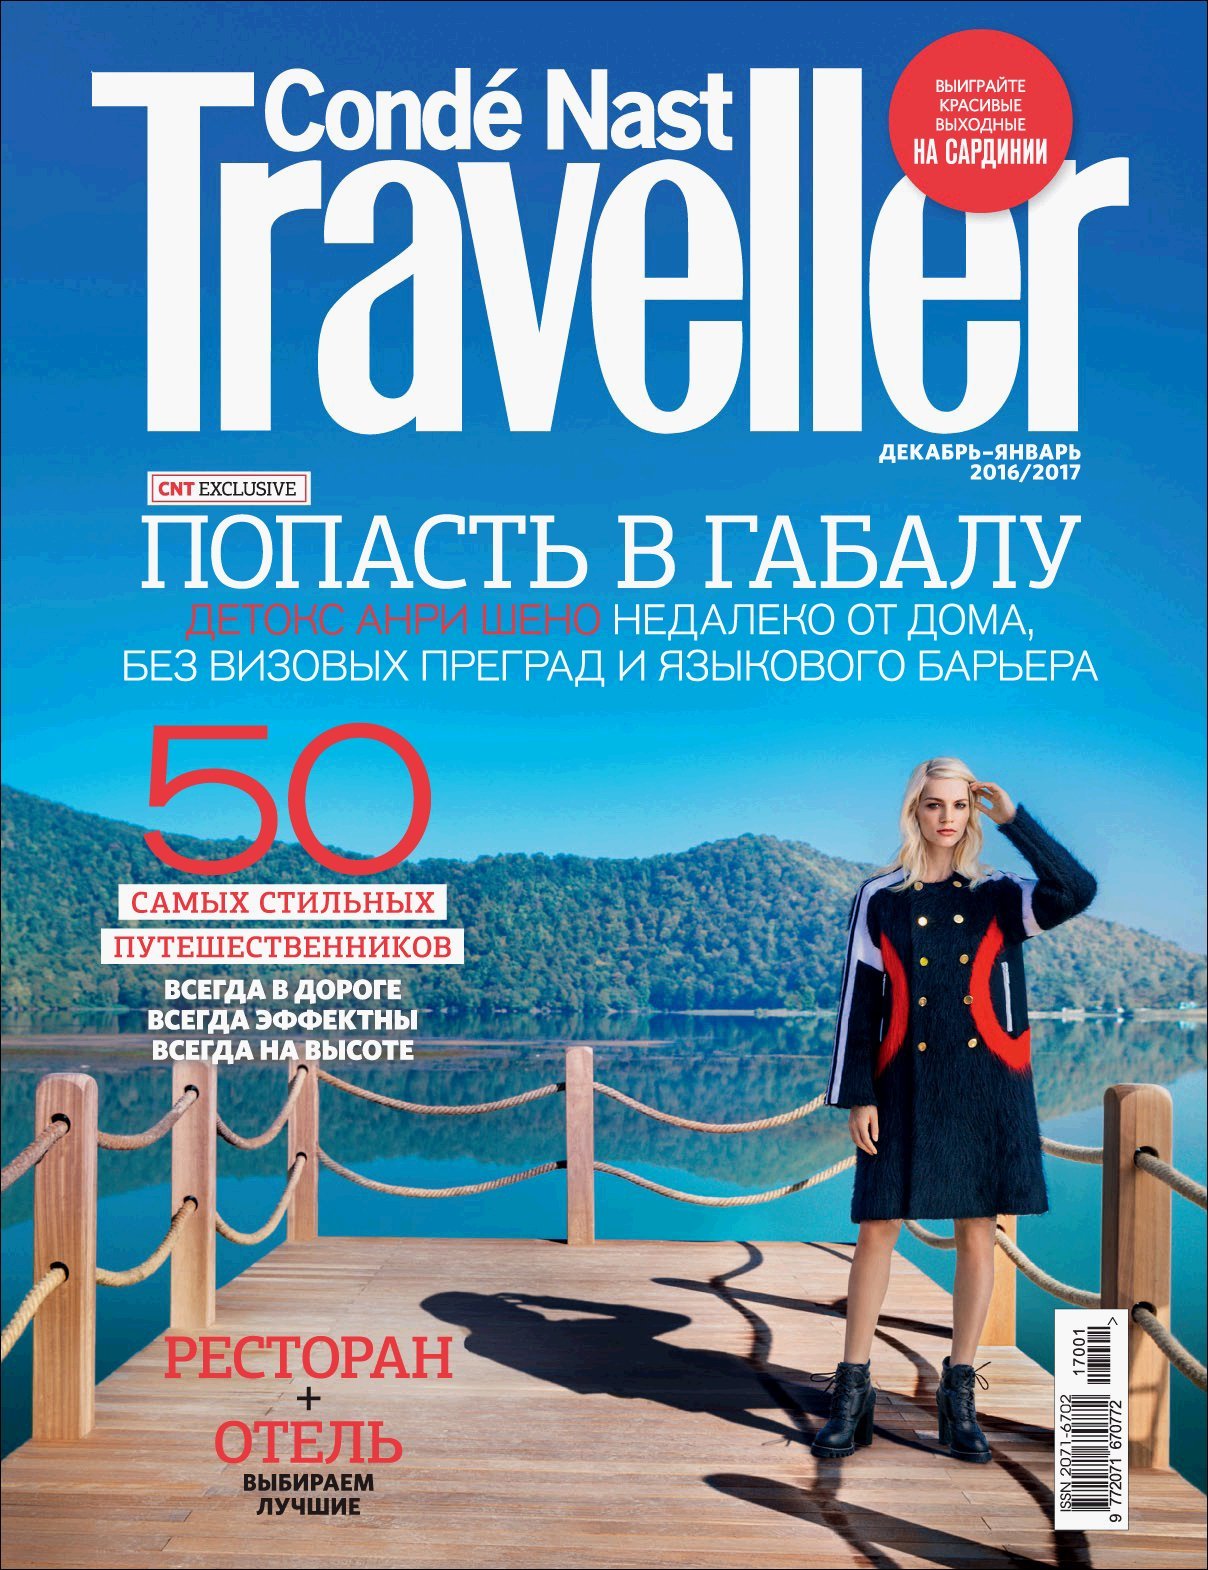 Traveling magazine. Conde Nast журналы. Журнал traveller. Conde Nast traveller. Журнал о путешествиях.